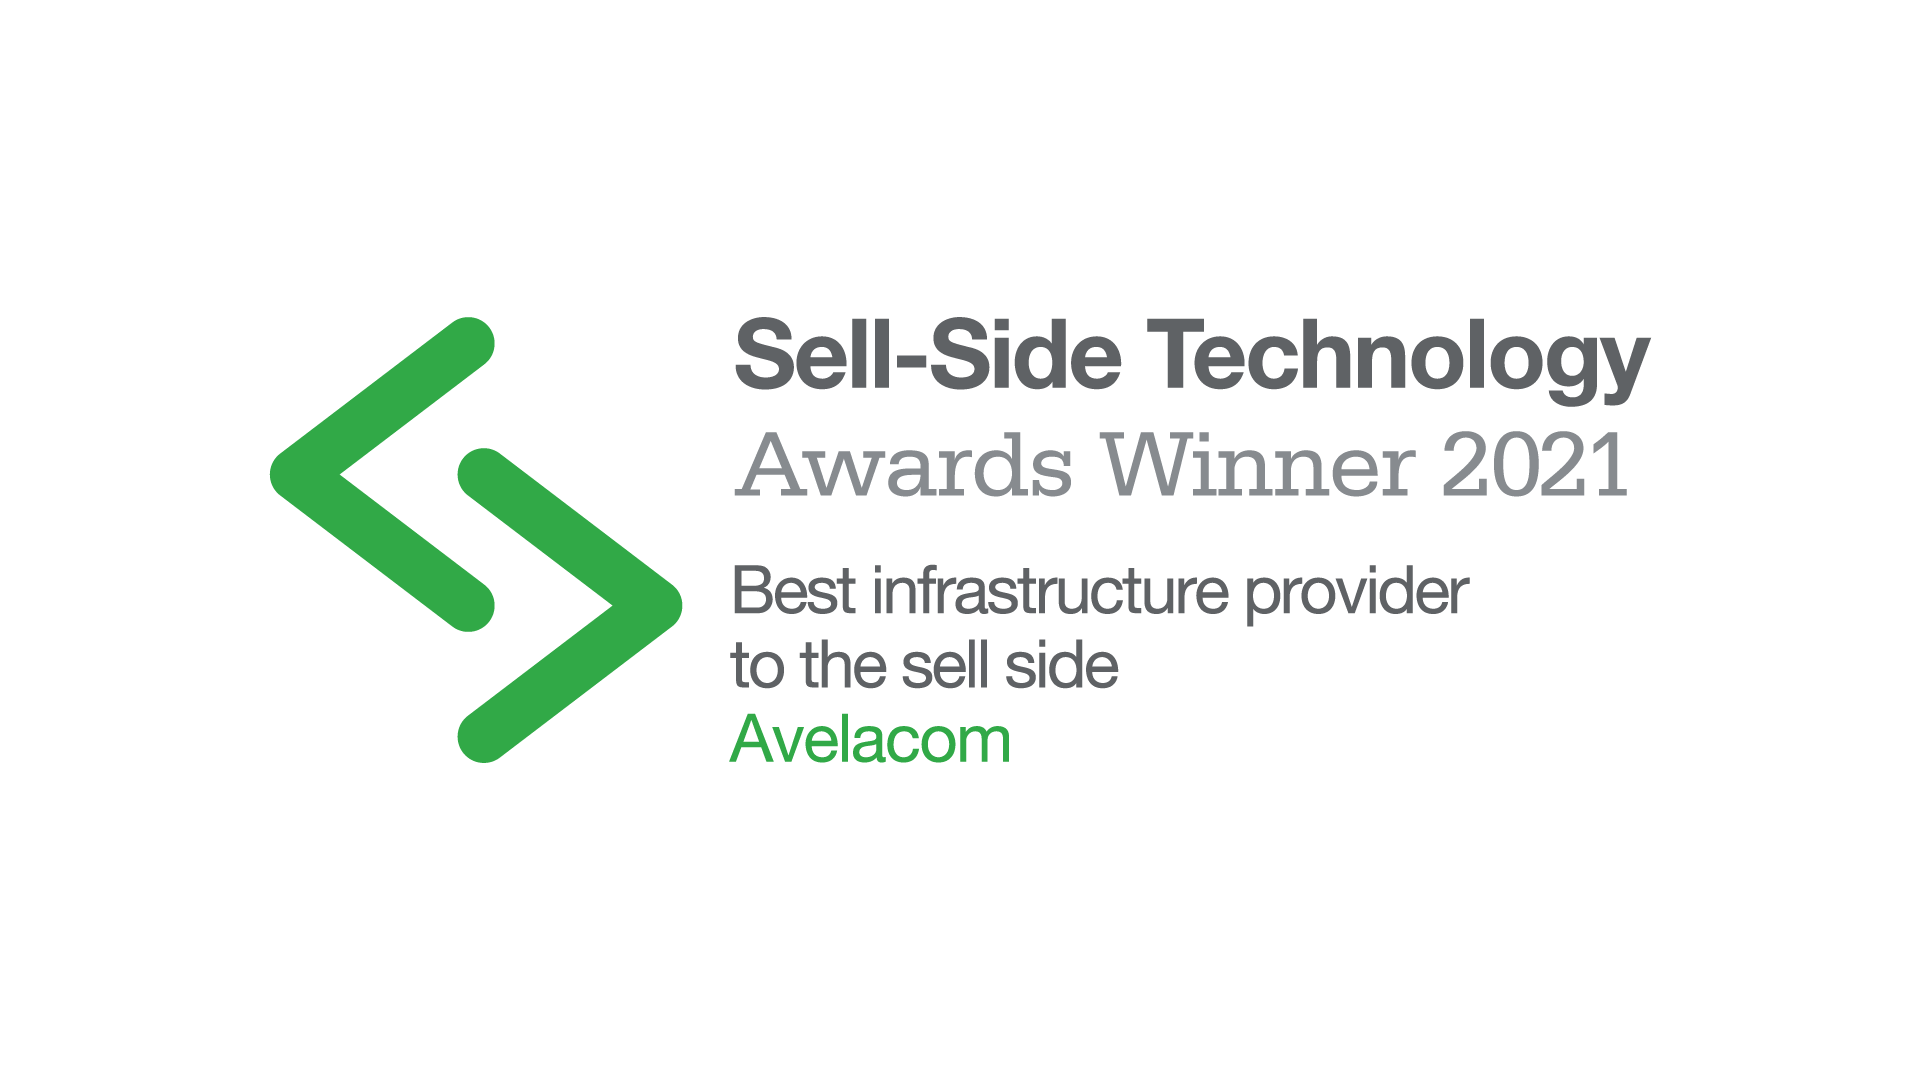 Avelacom wins Best Infrastructure Provider to the Sell Side